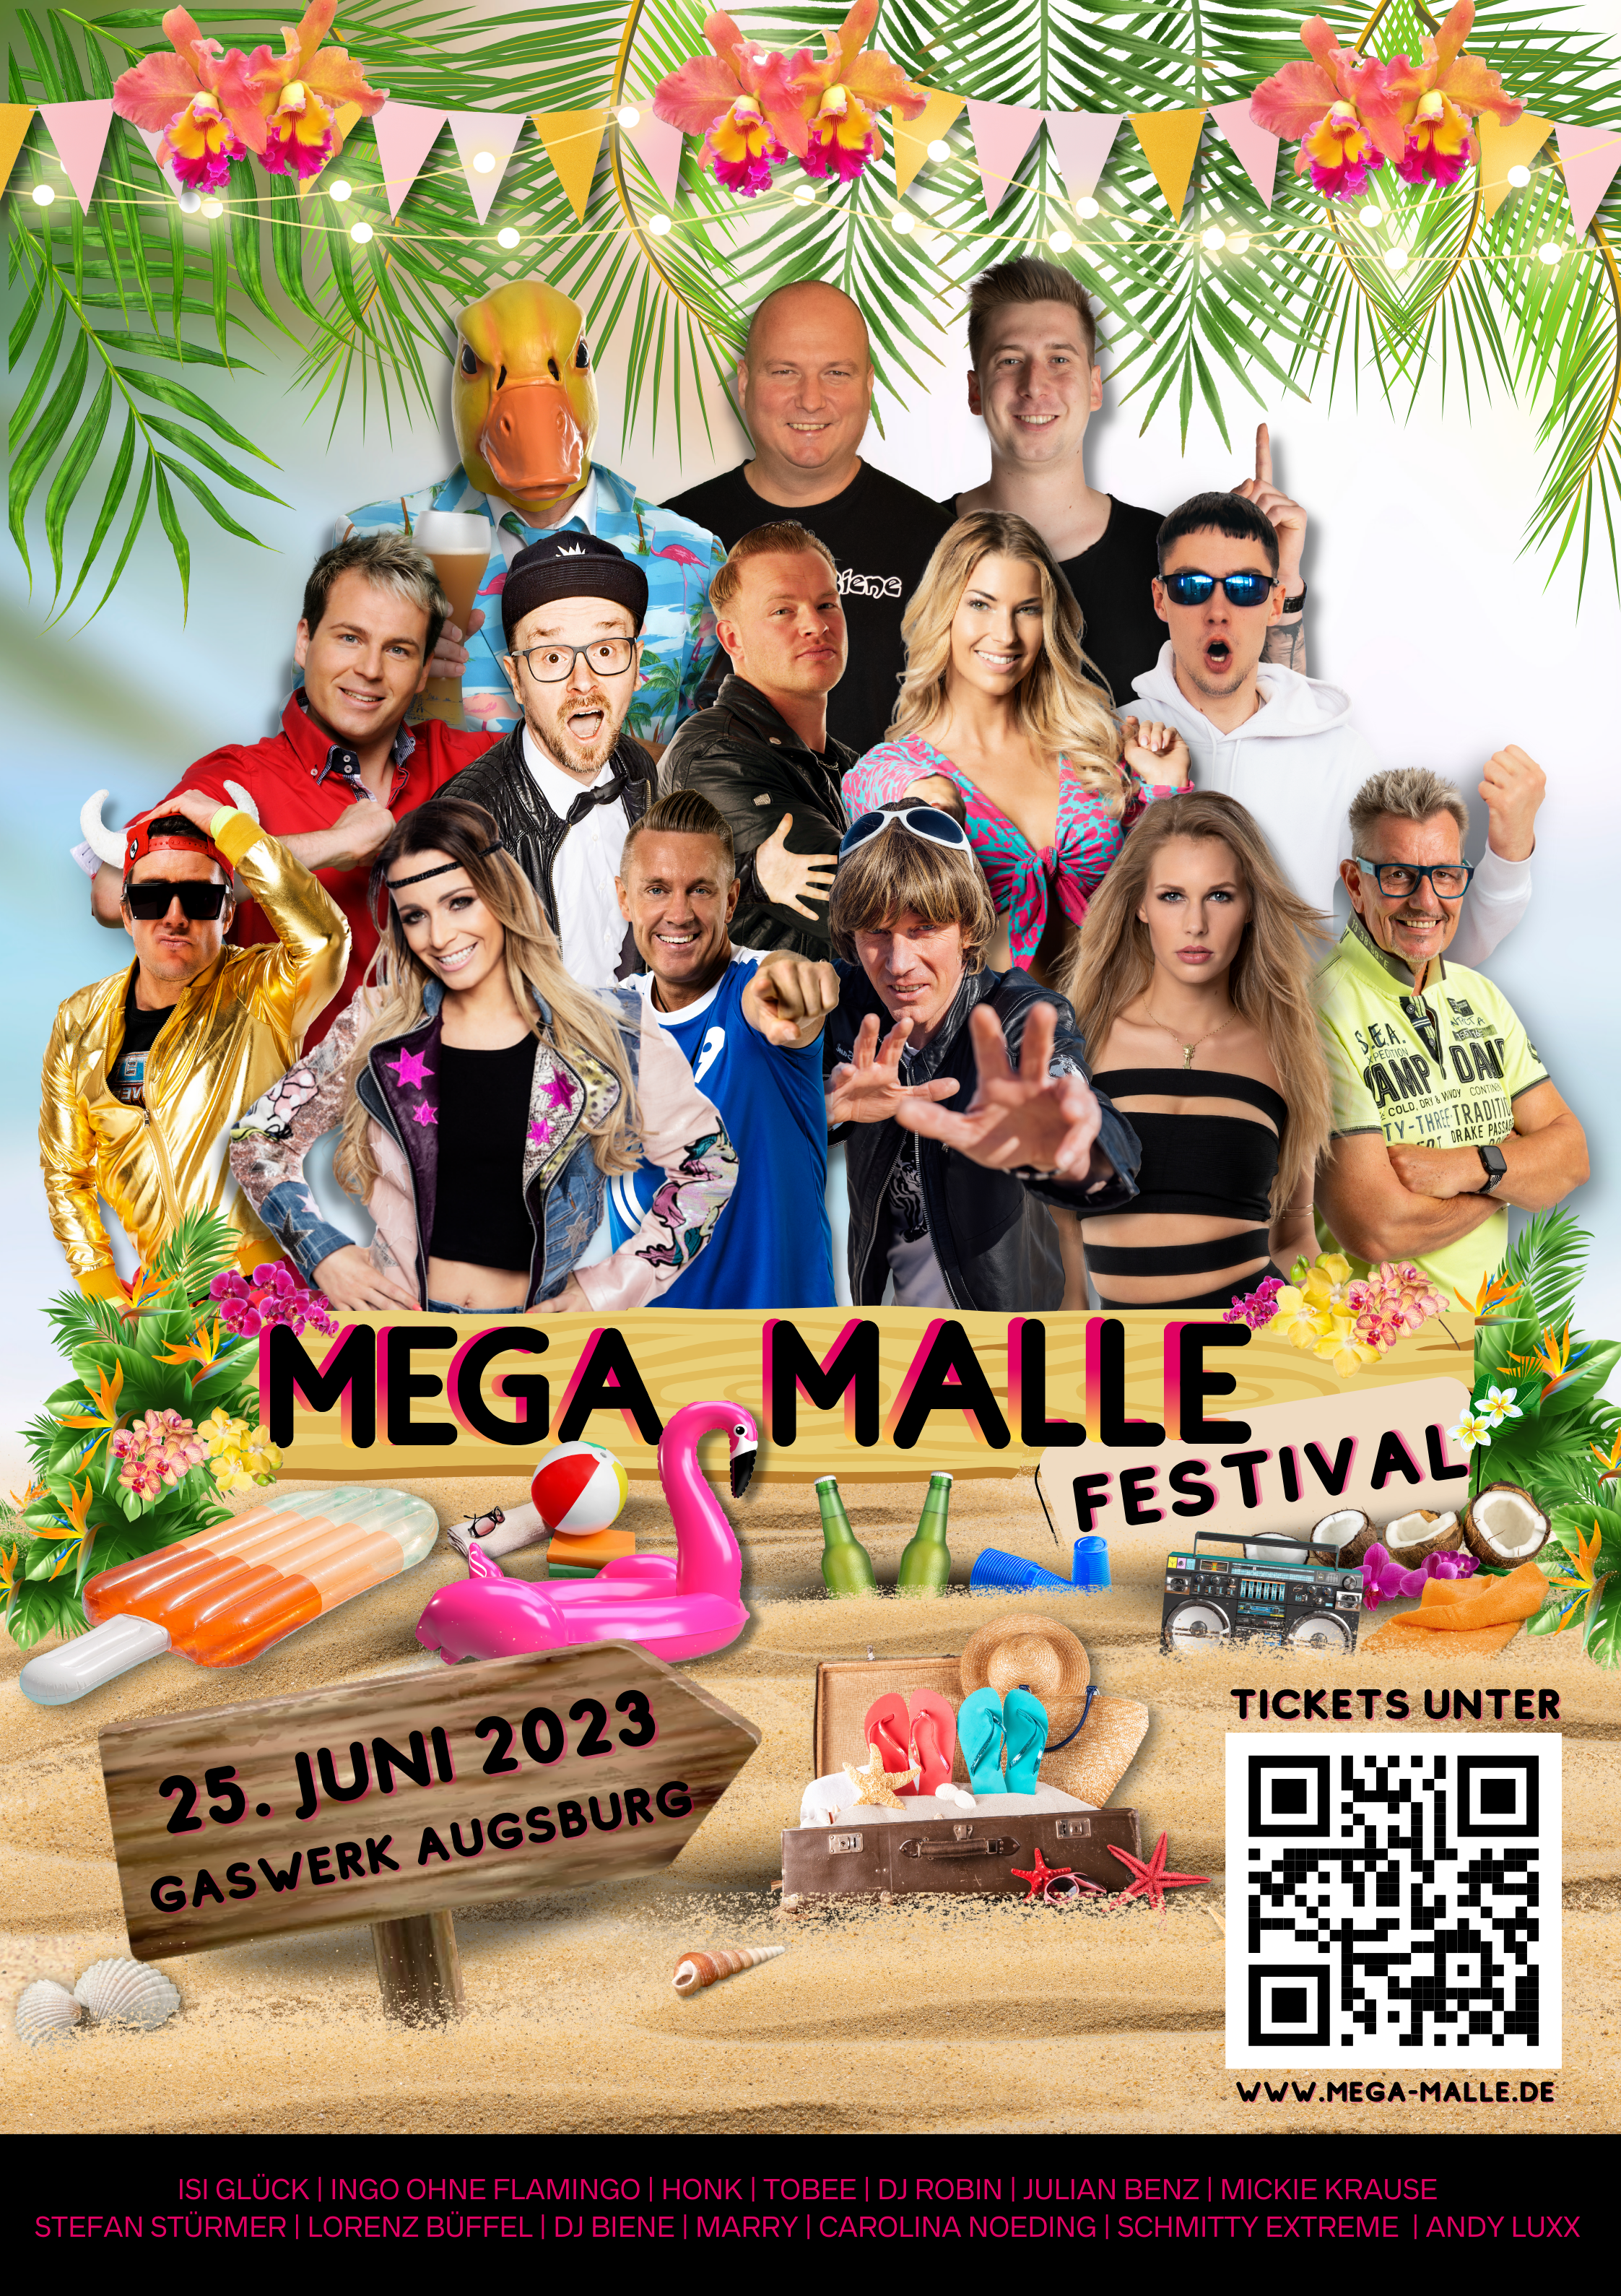 Das Mega-Malle Festival holt den Ballermann nach Augsburg